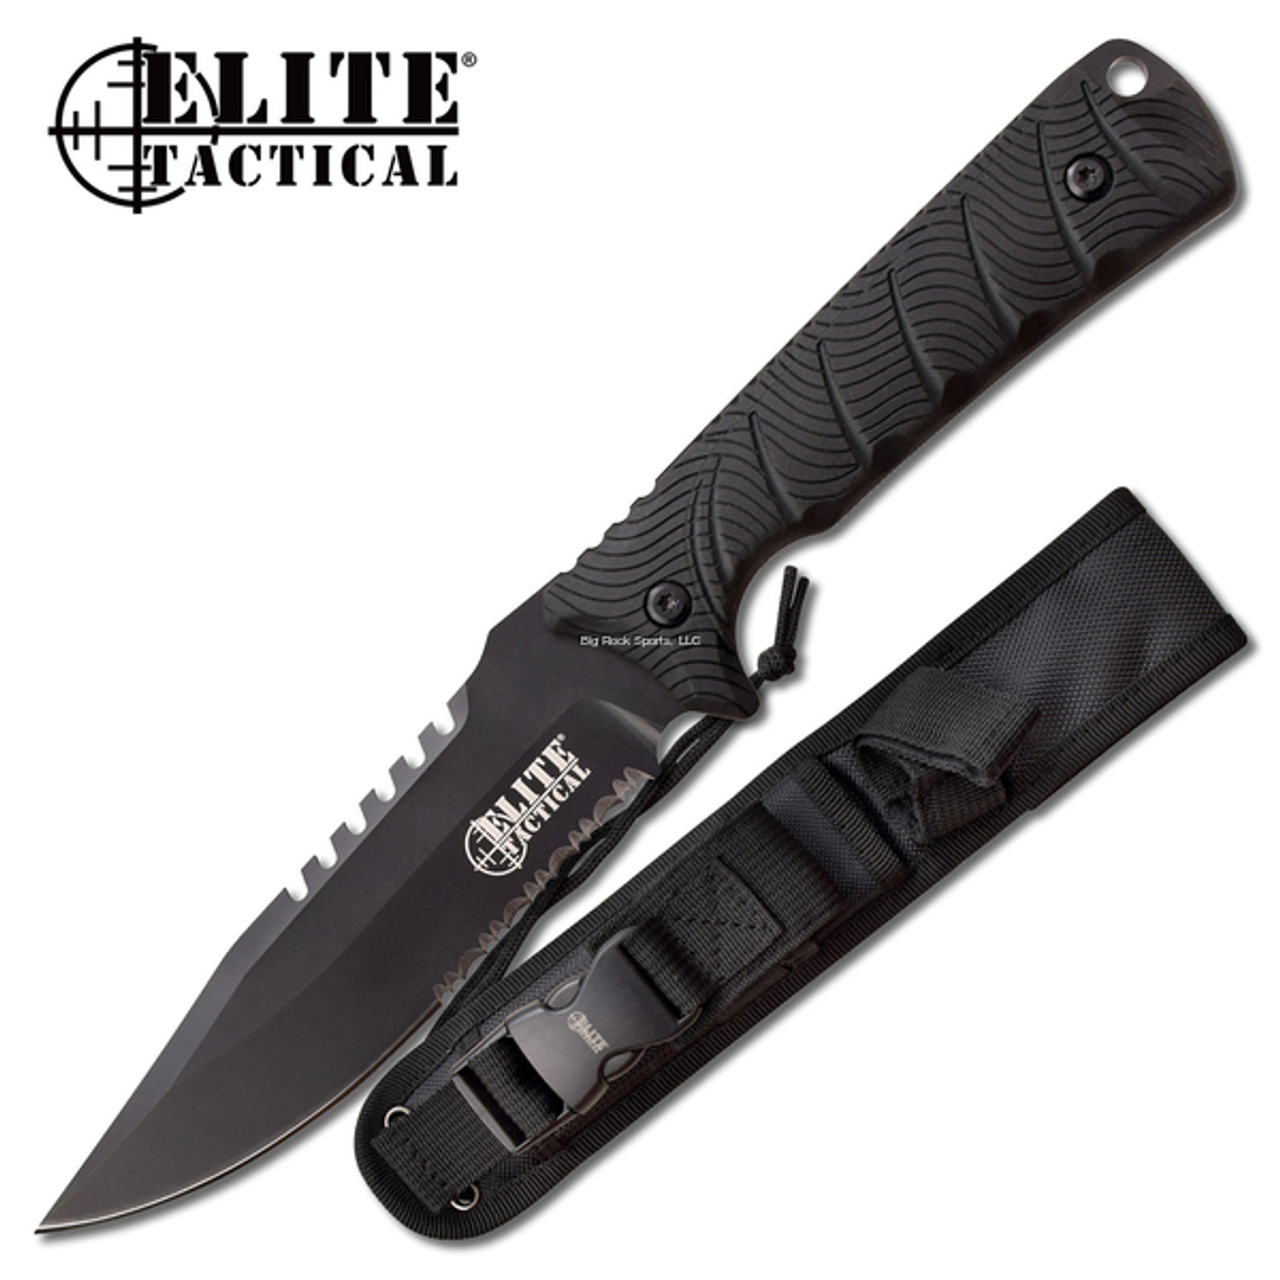 Elite Tactical Backdraft 5" Fixed Knife, Serrated Steel Blade